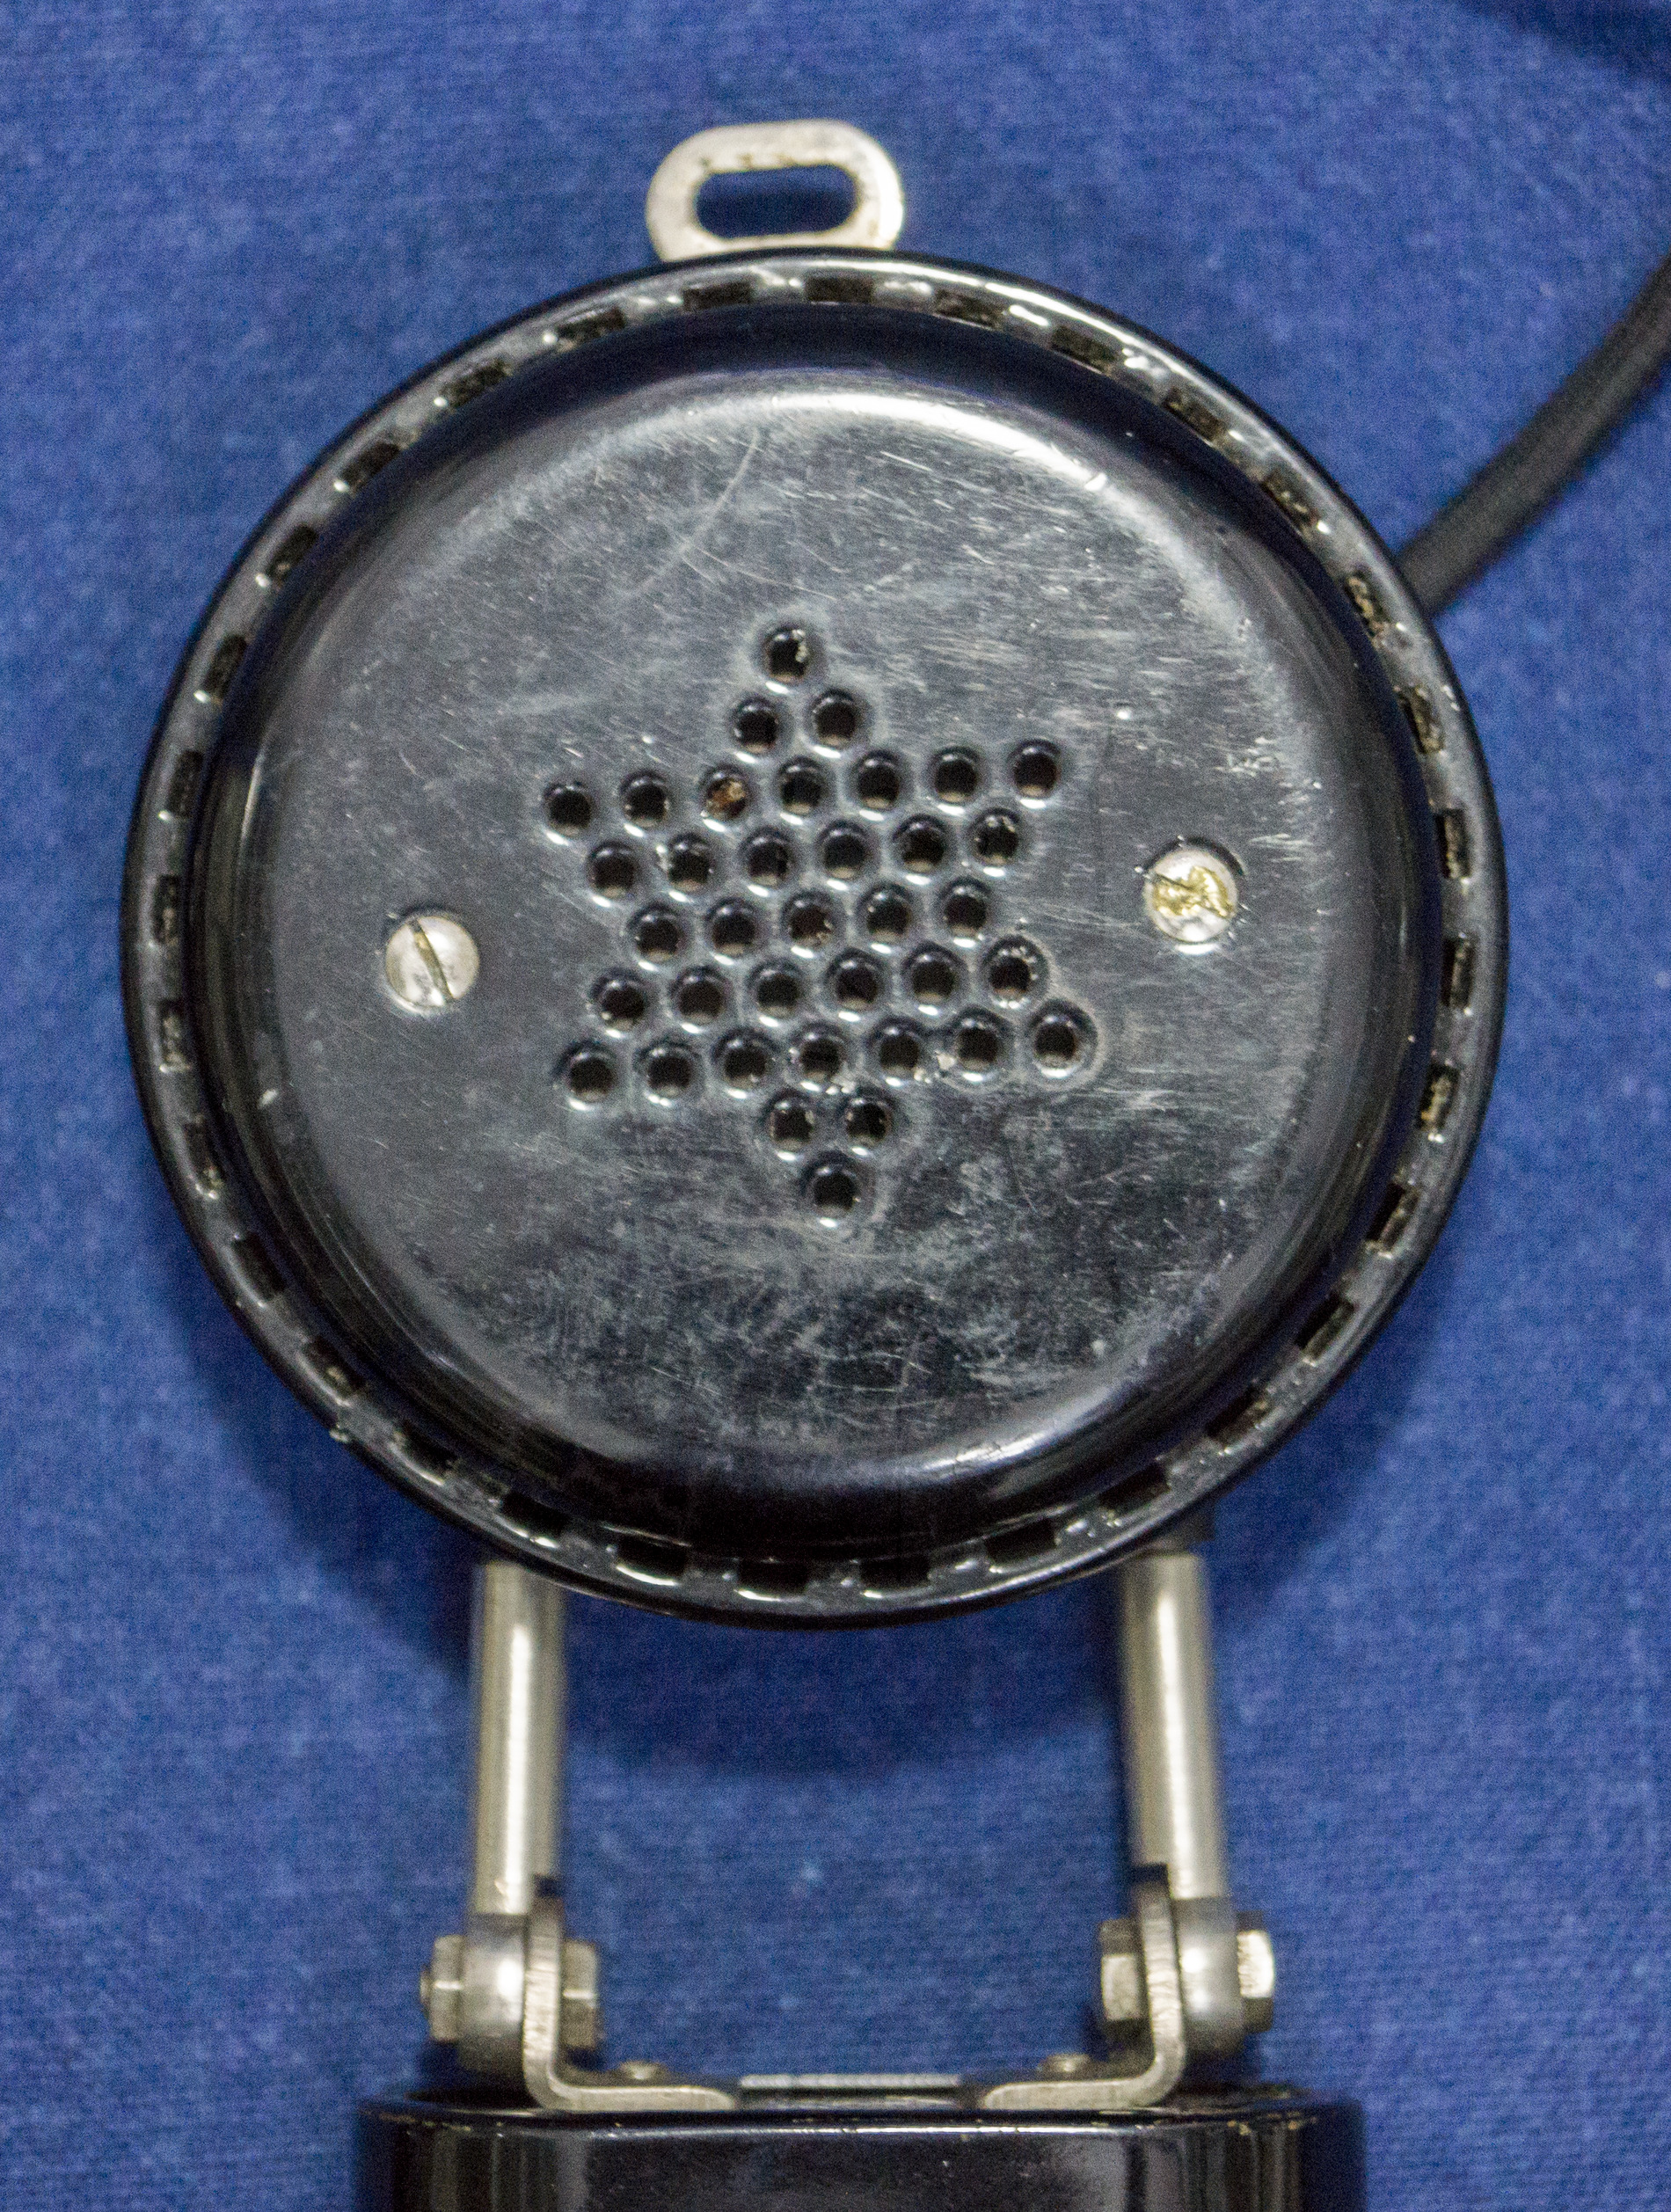 Hörgerät "Ich Höre Alles", ca. 1928/1930, Vorderseite Kohle-Mikrophone